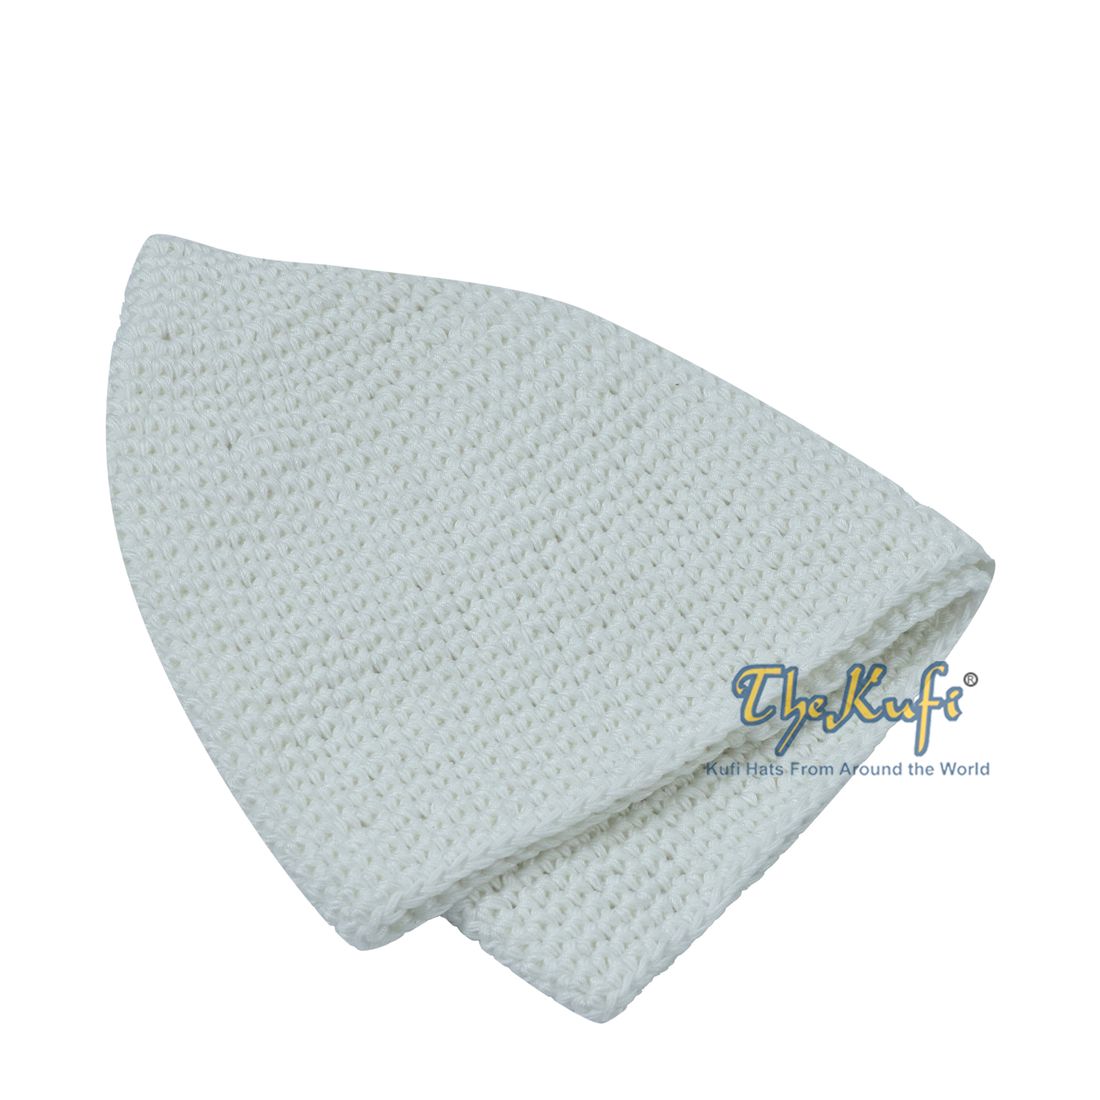 White Cotton Kufi Skull Cap Hand-Crocheted 100% Comfortable Fit for Salah